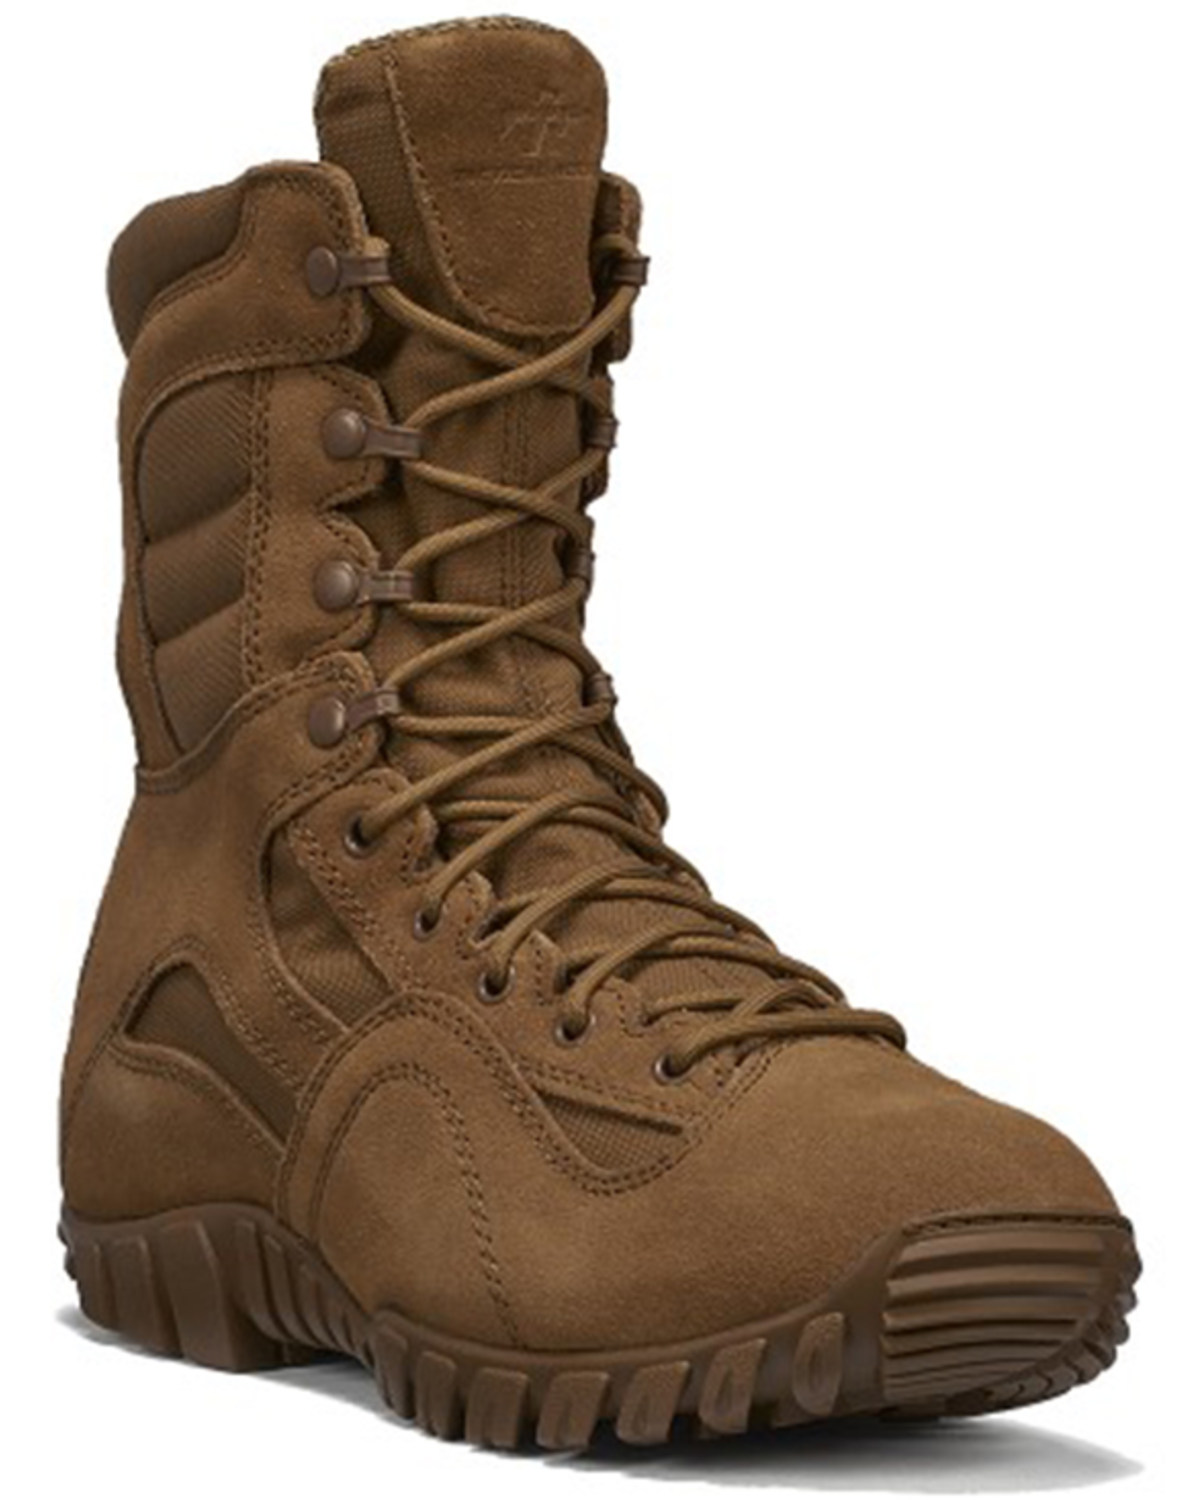 Belleville Men's Khyber 8" Waterproof Insulated Assault Work Boots - Round Toe